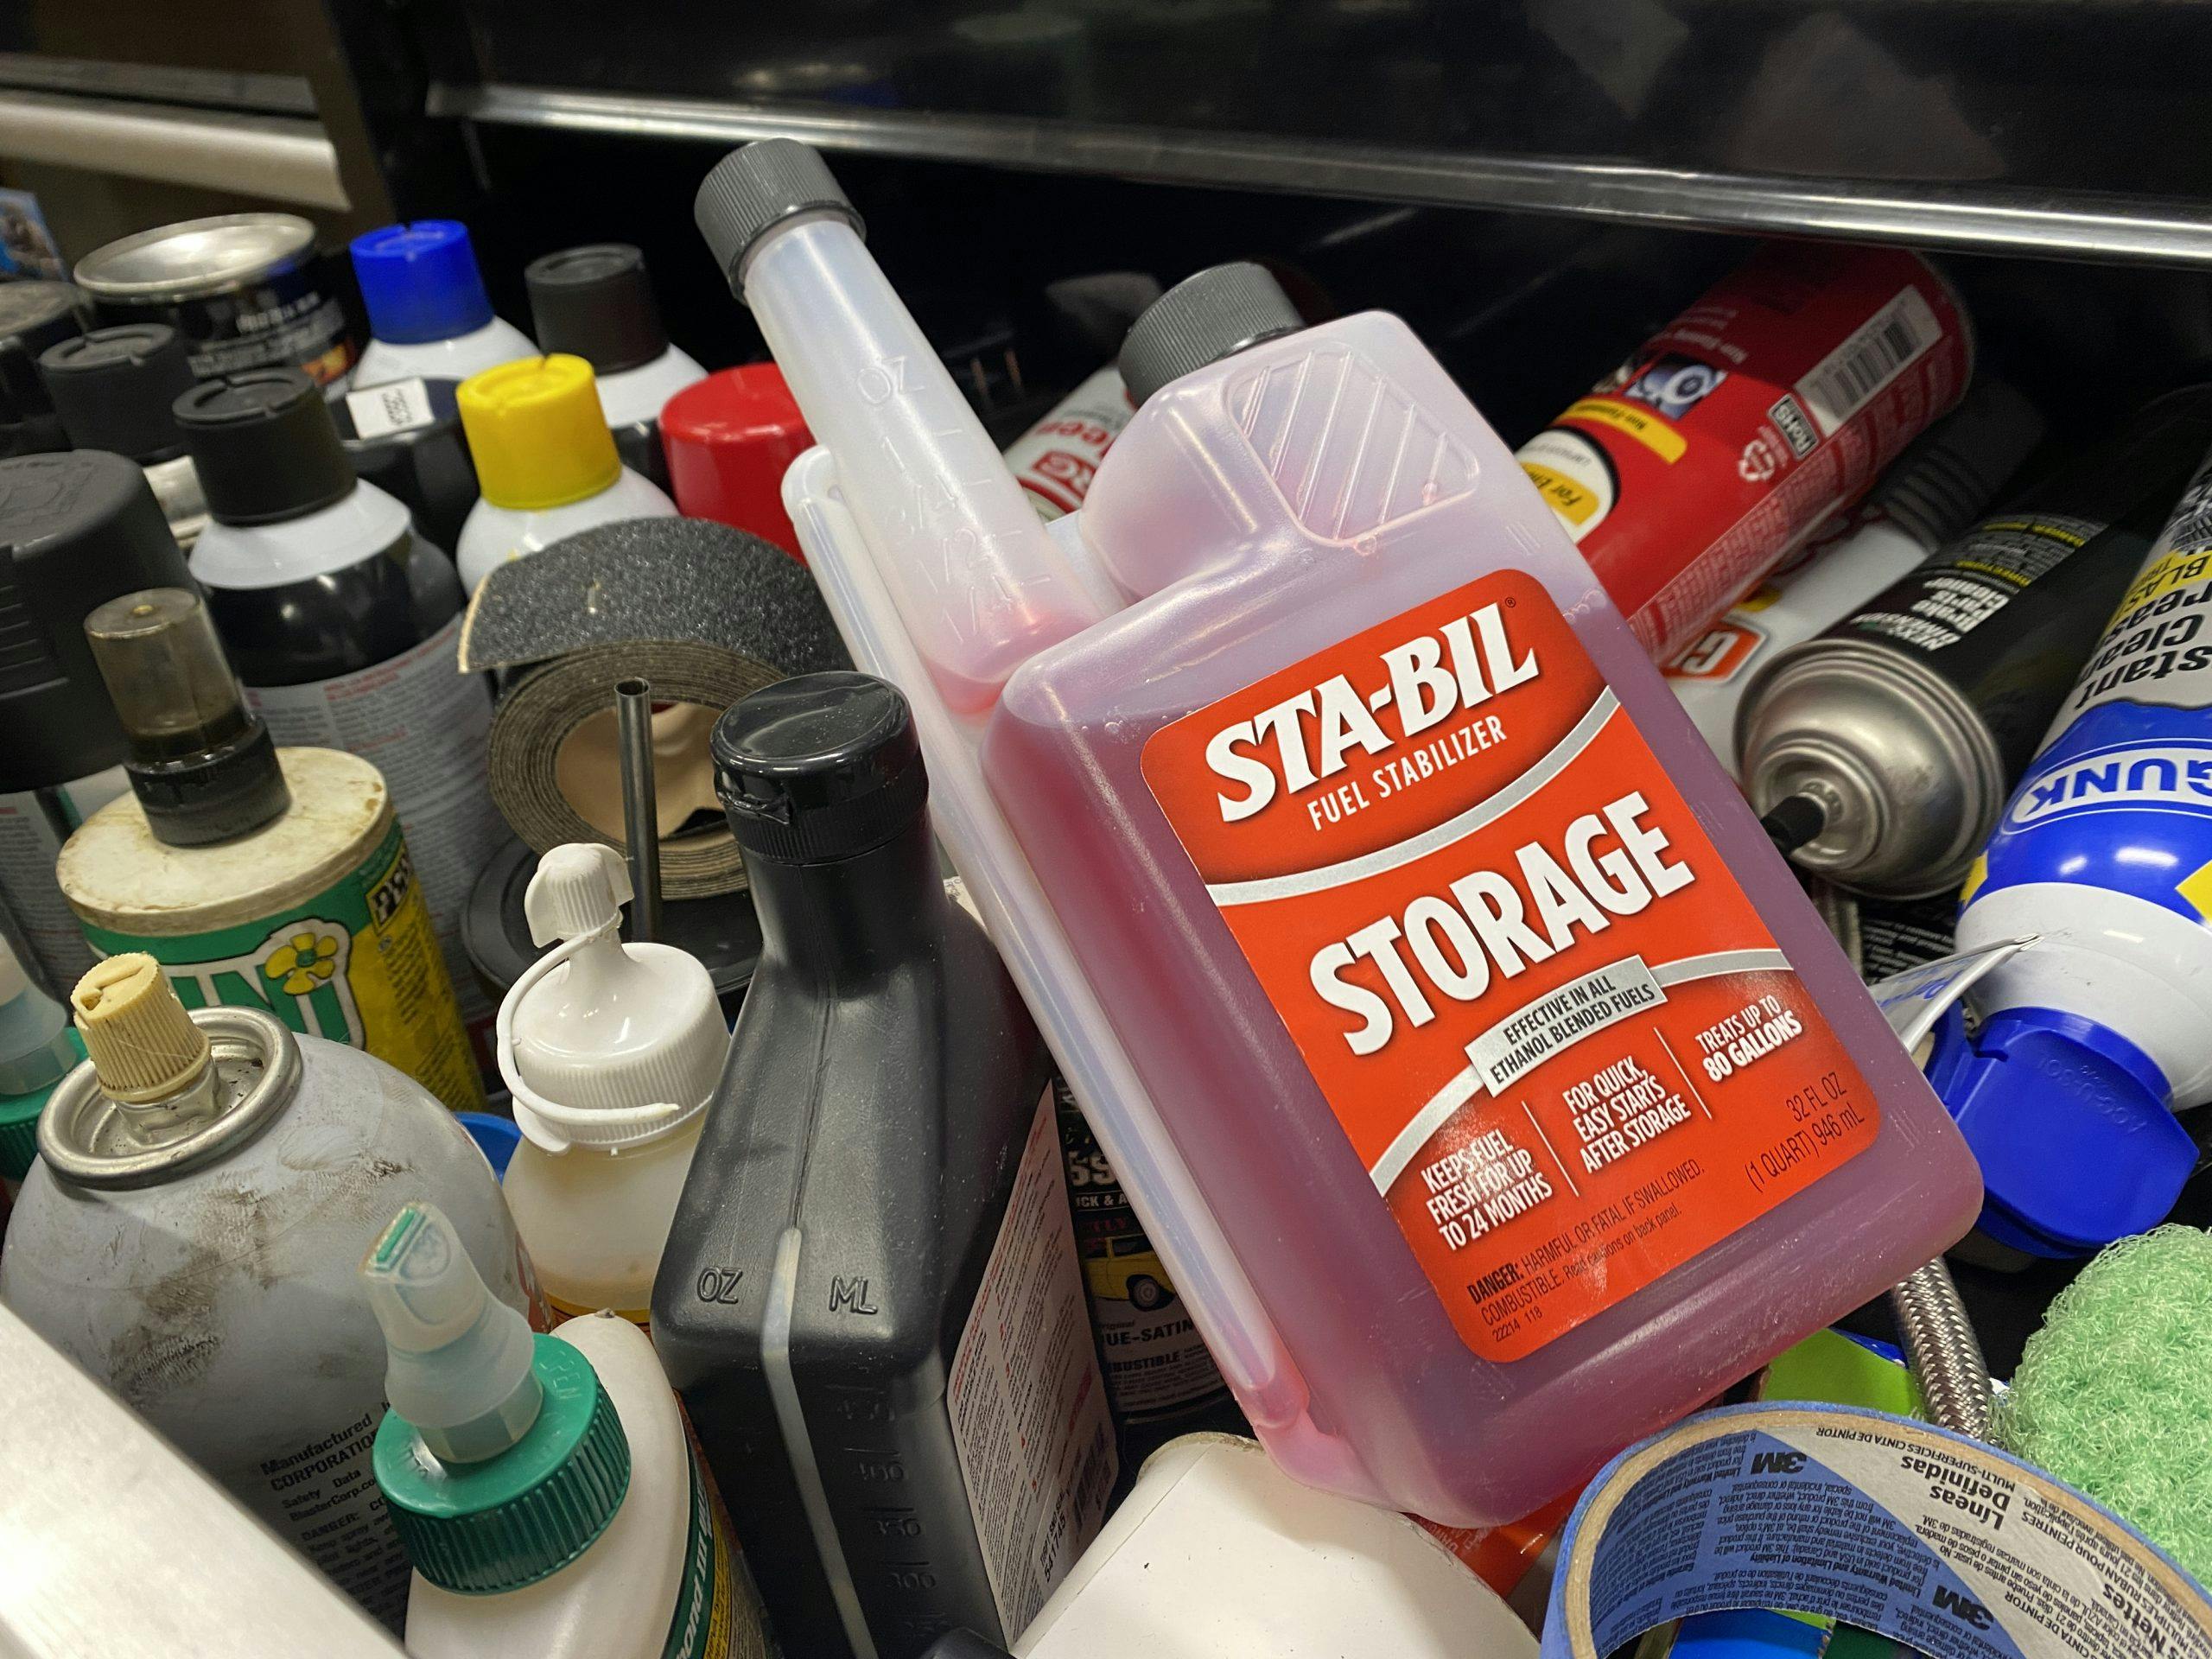 Sta-bil gas treatment in drawer